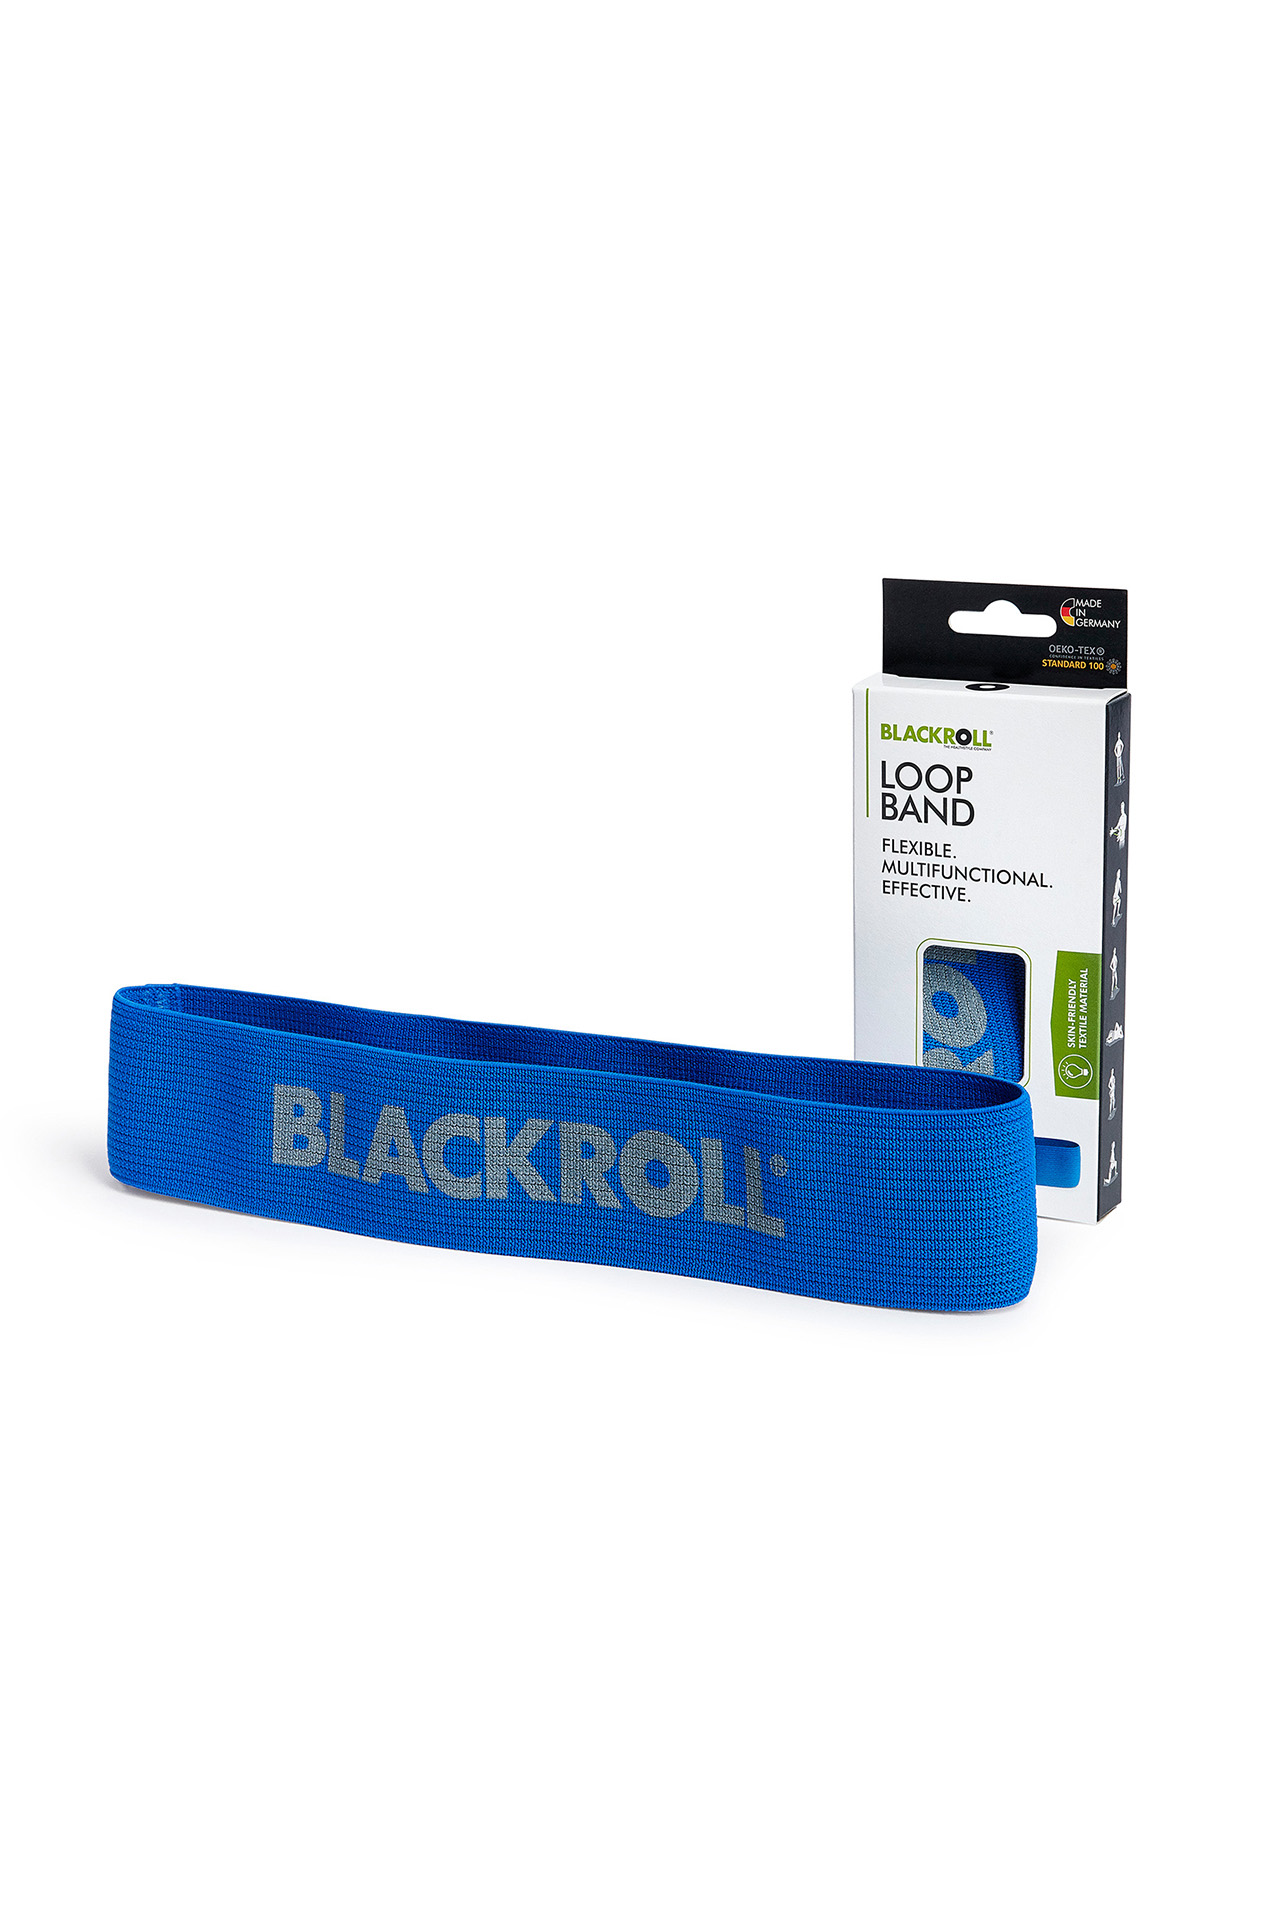 blackroll loop band blue training fengbao shop 1080 wien